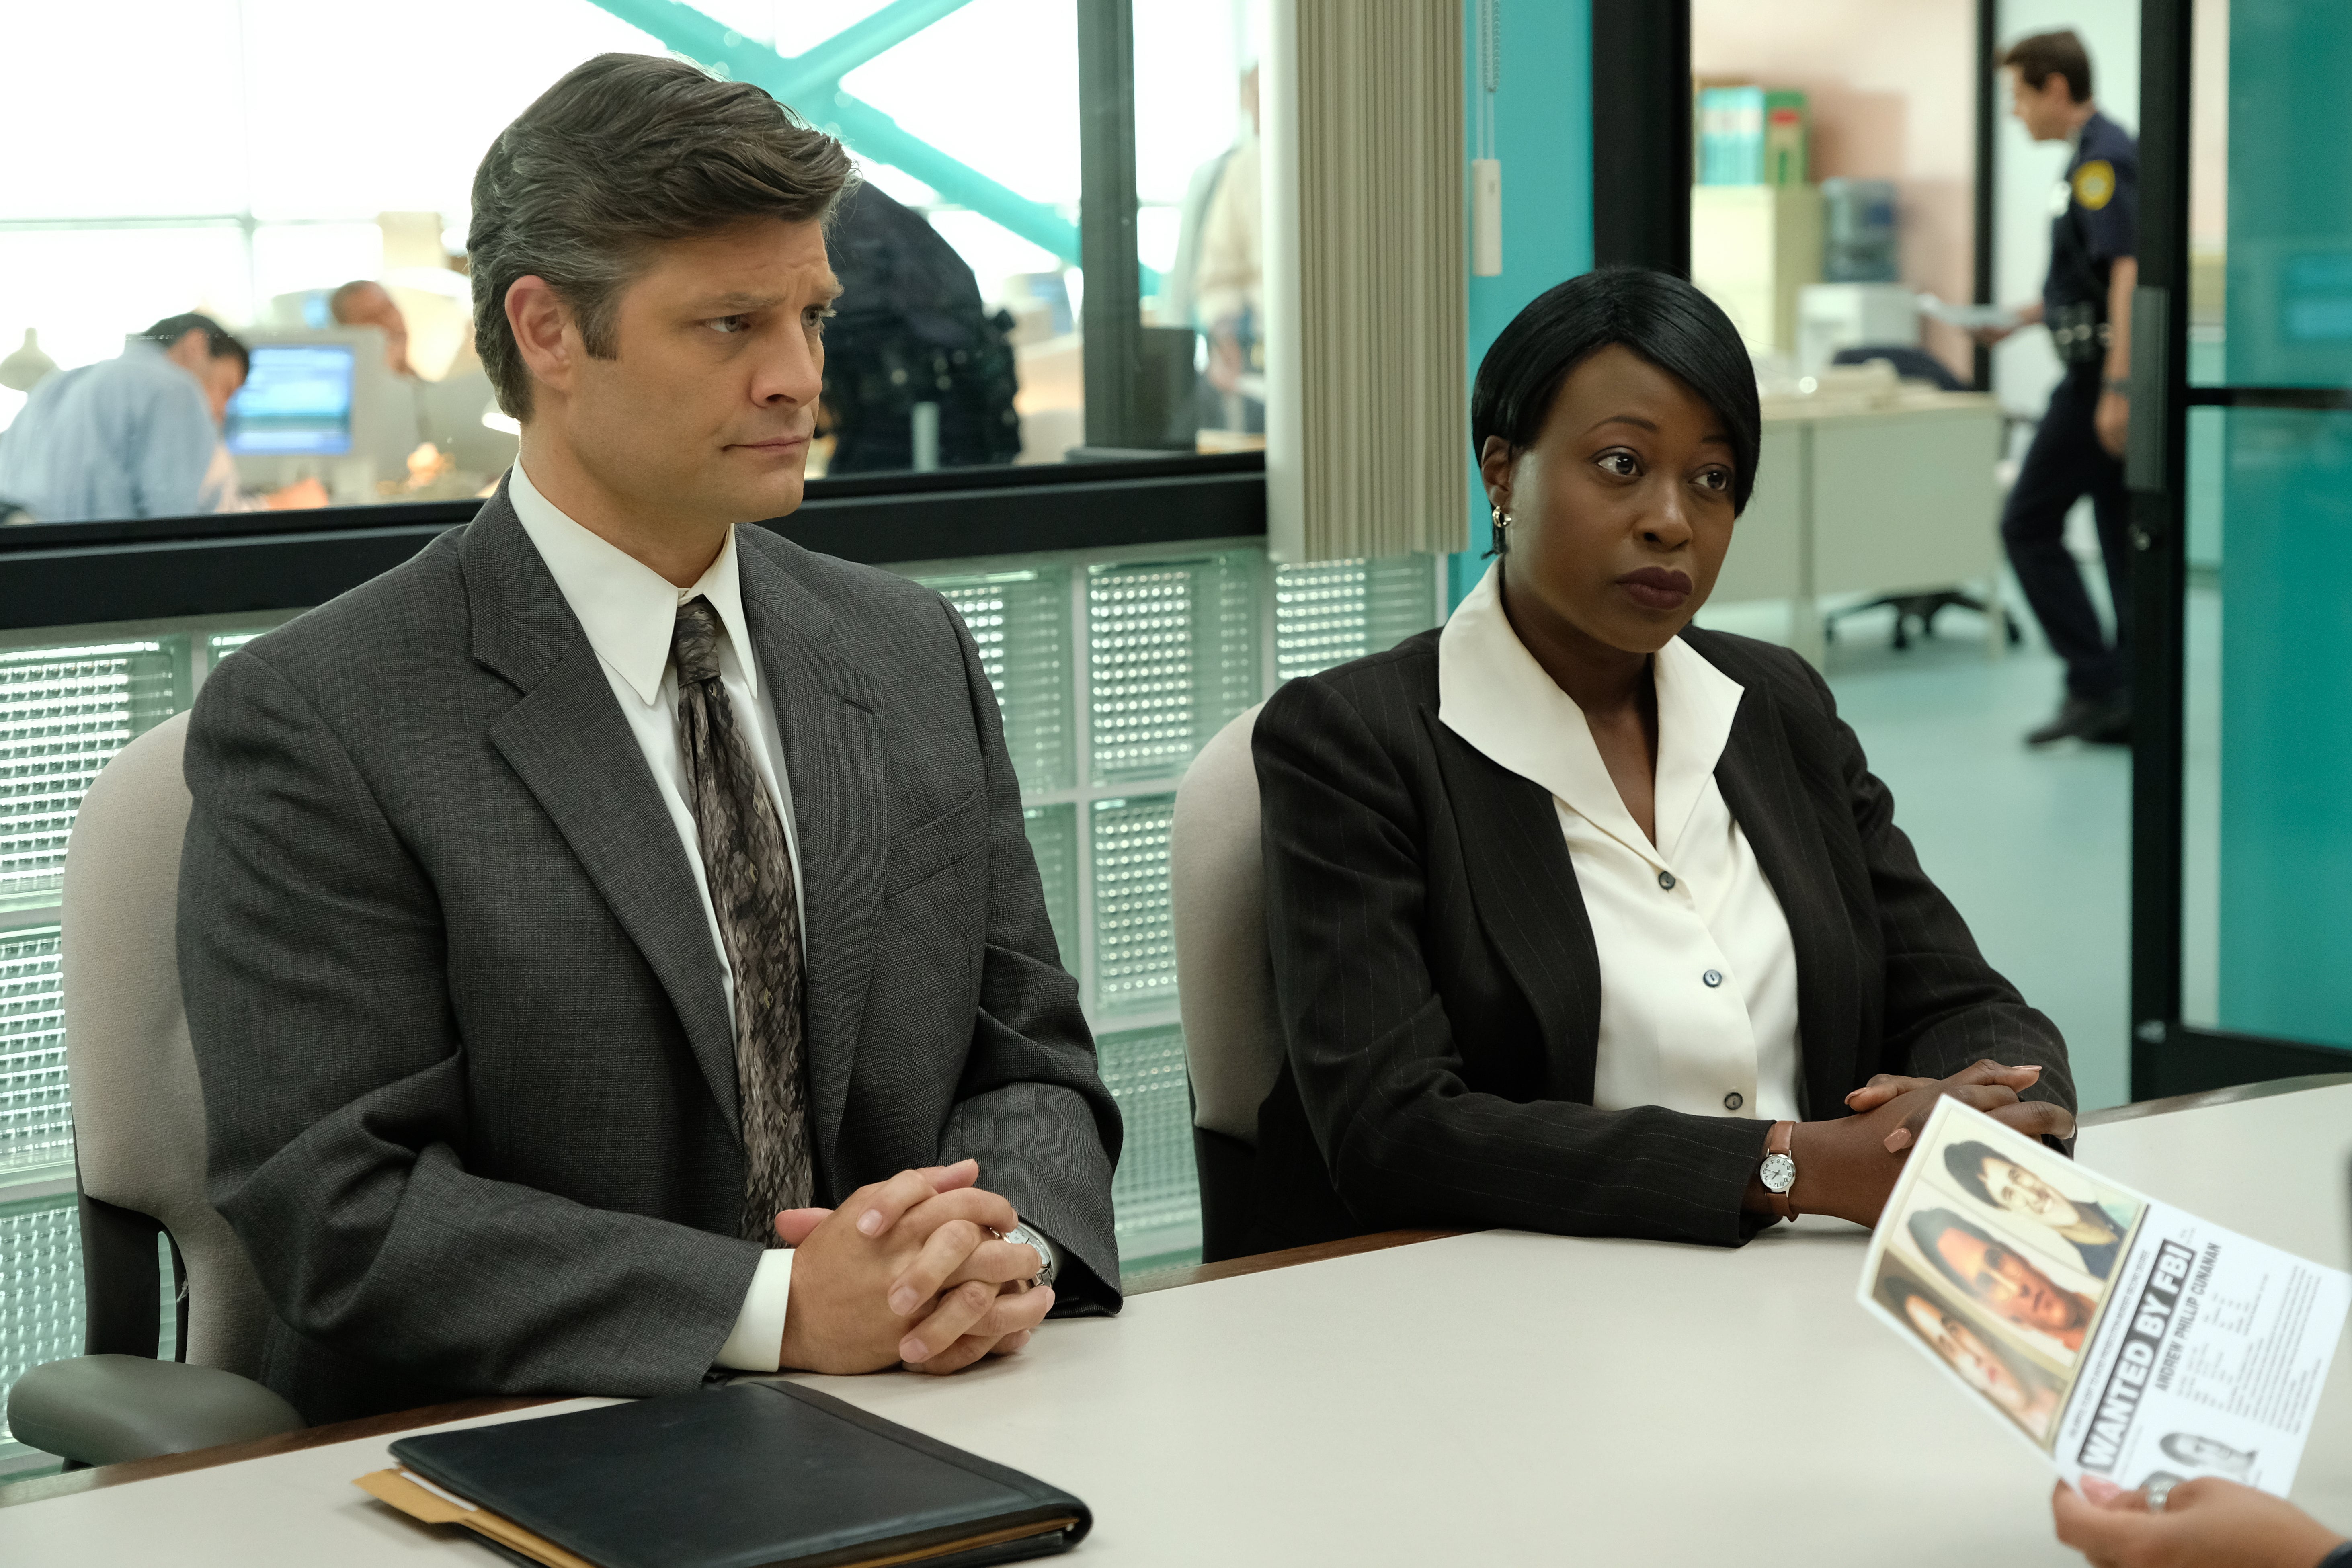 Jay R. Ferguson as FBI Agent Evans and Christine Horn as FBI Agent Gruber.